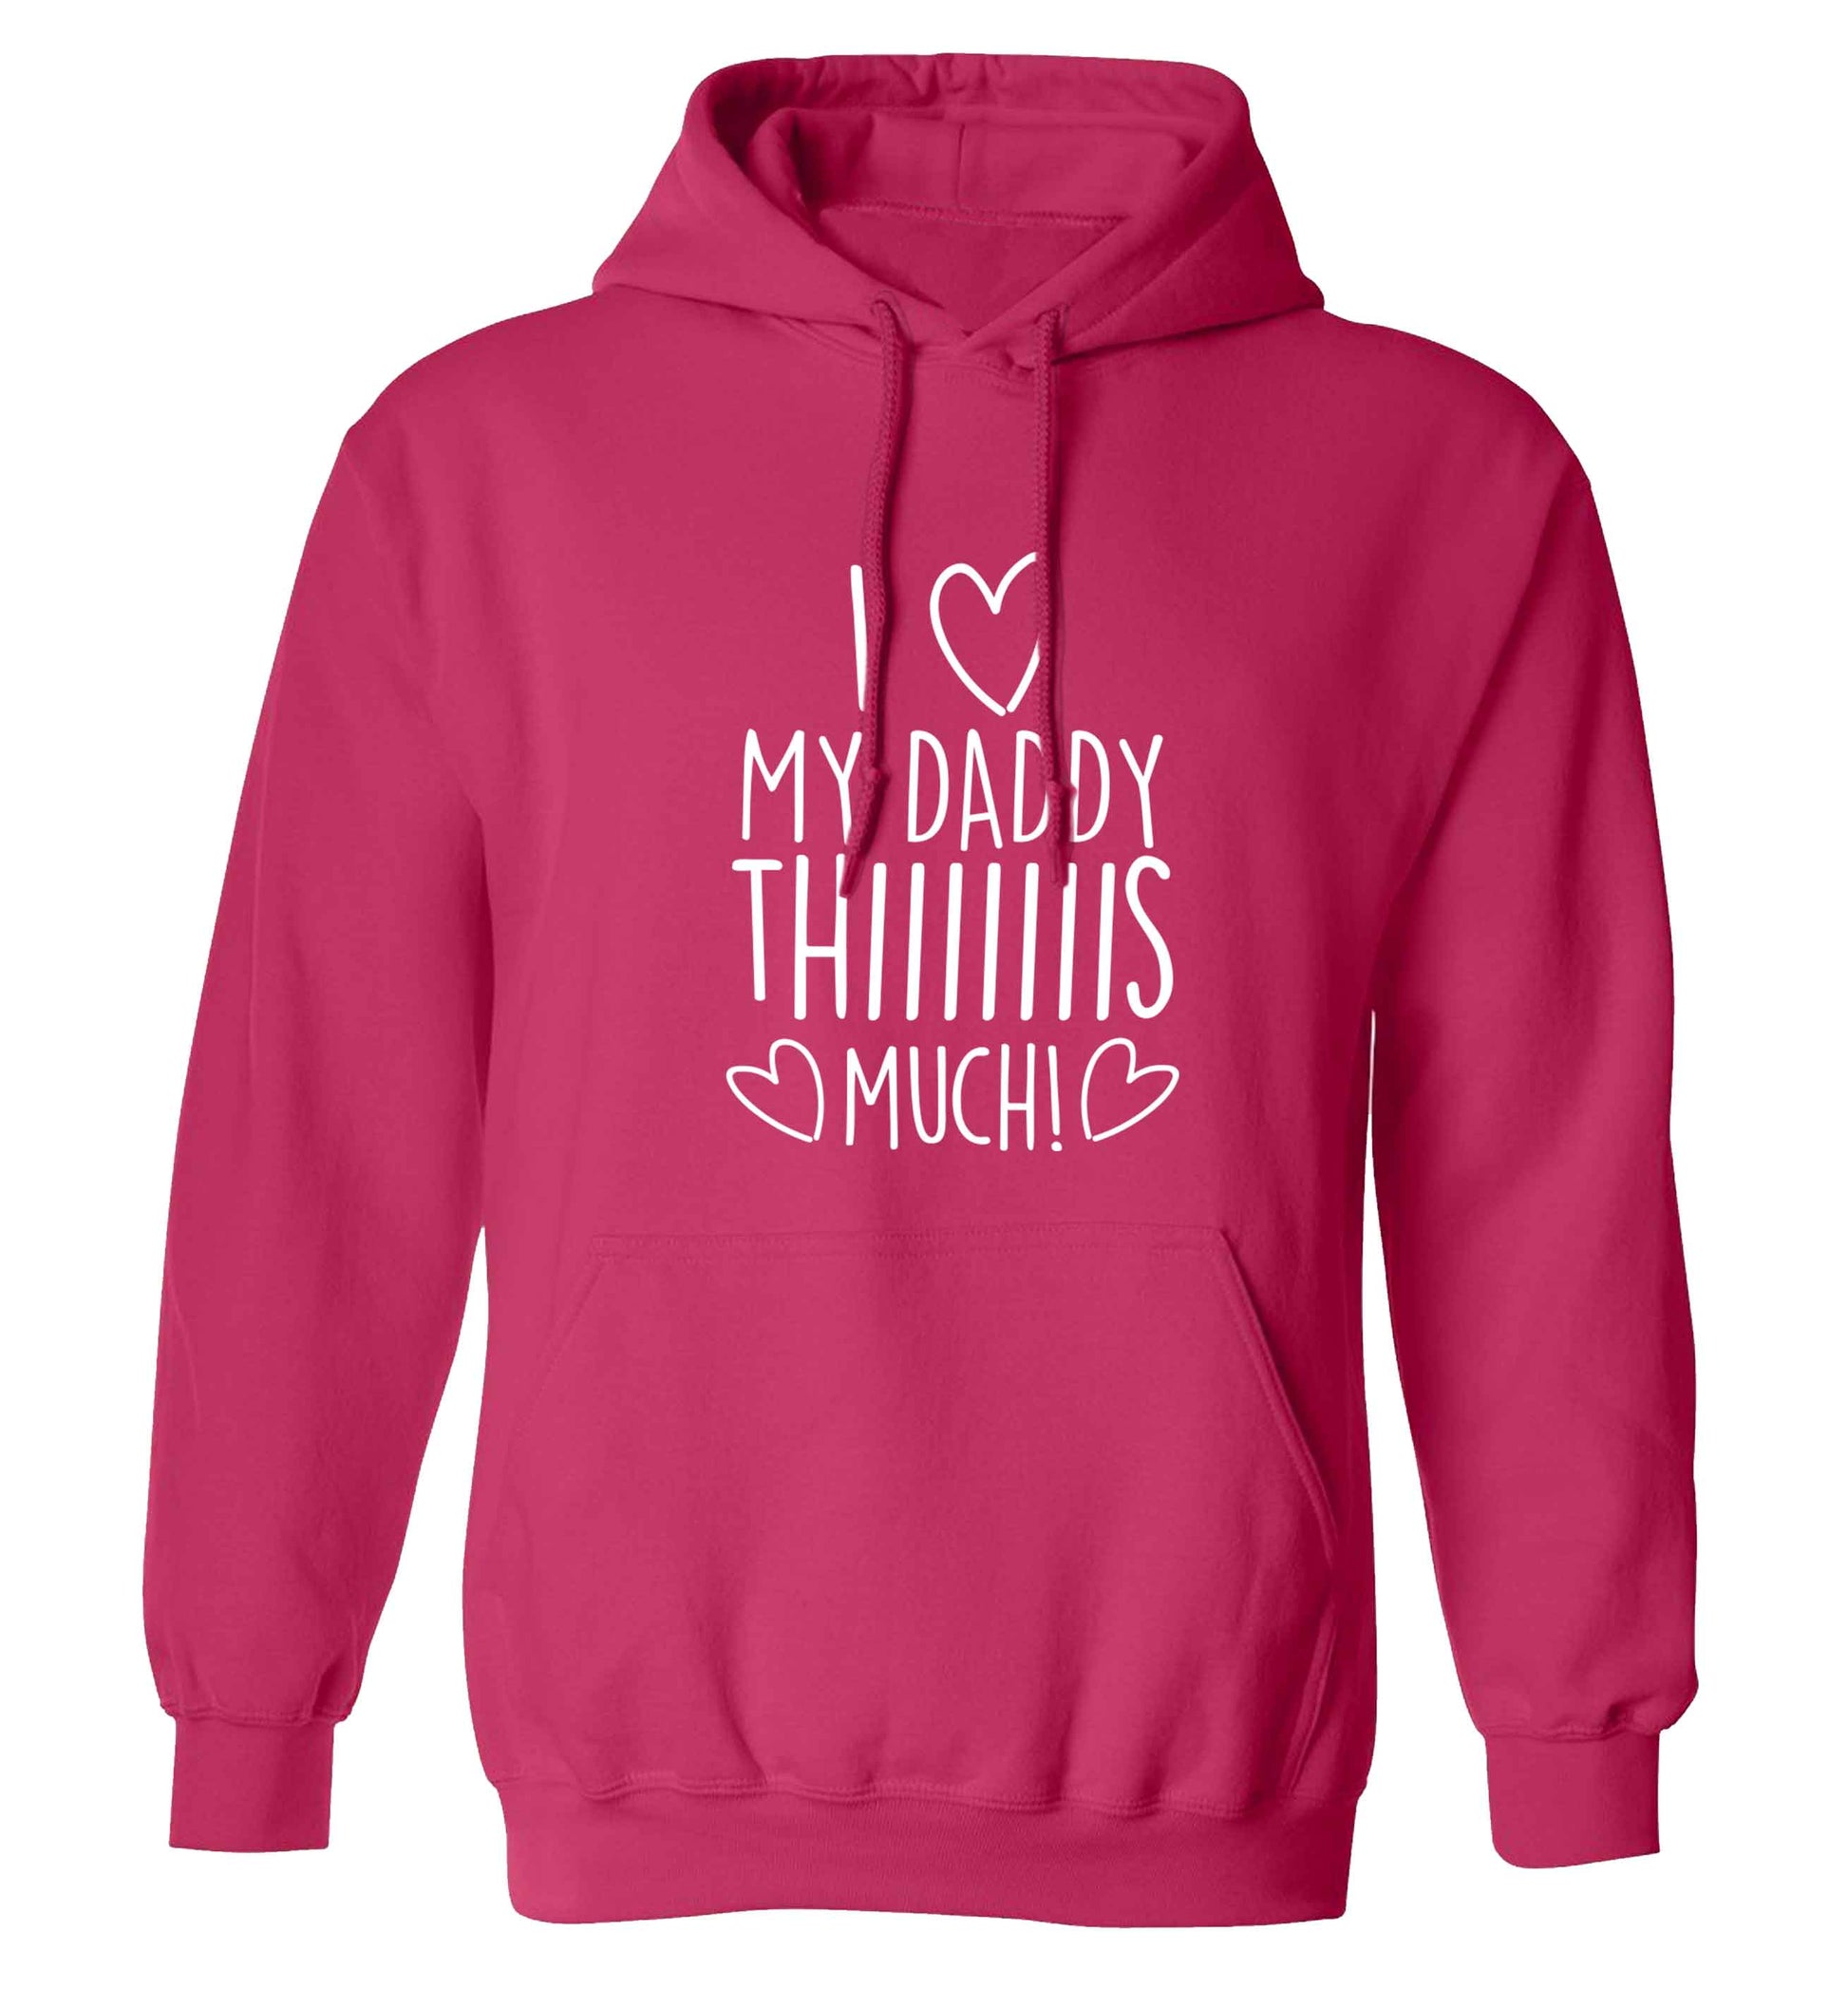 I love my daddy thiiiiis much! adults unisex pink hoodie 2XL